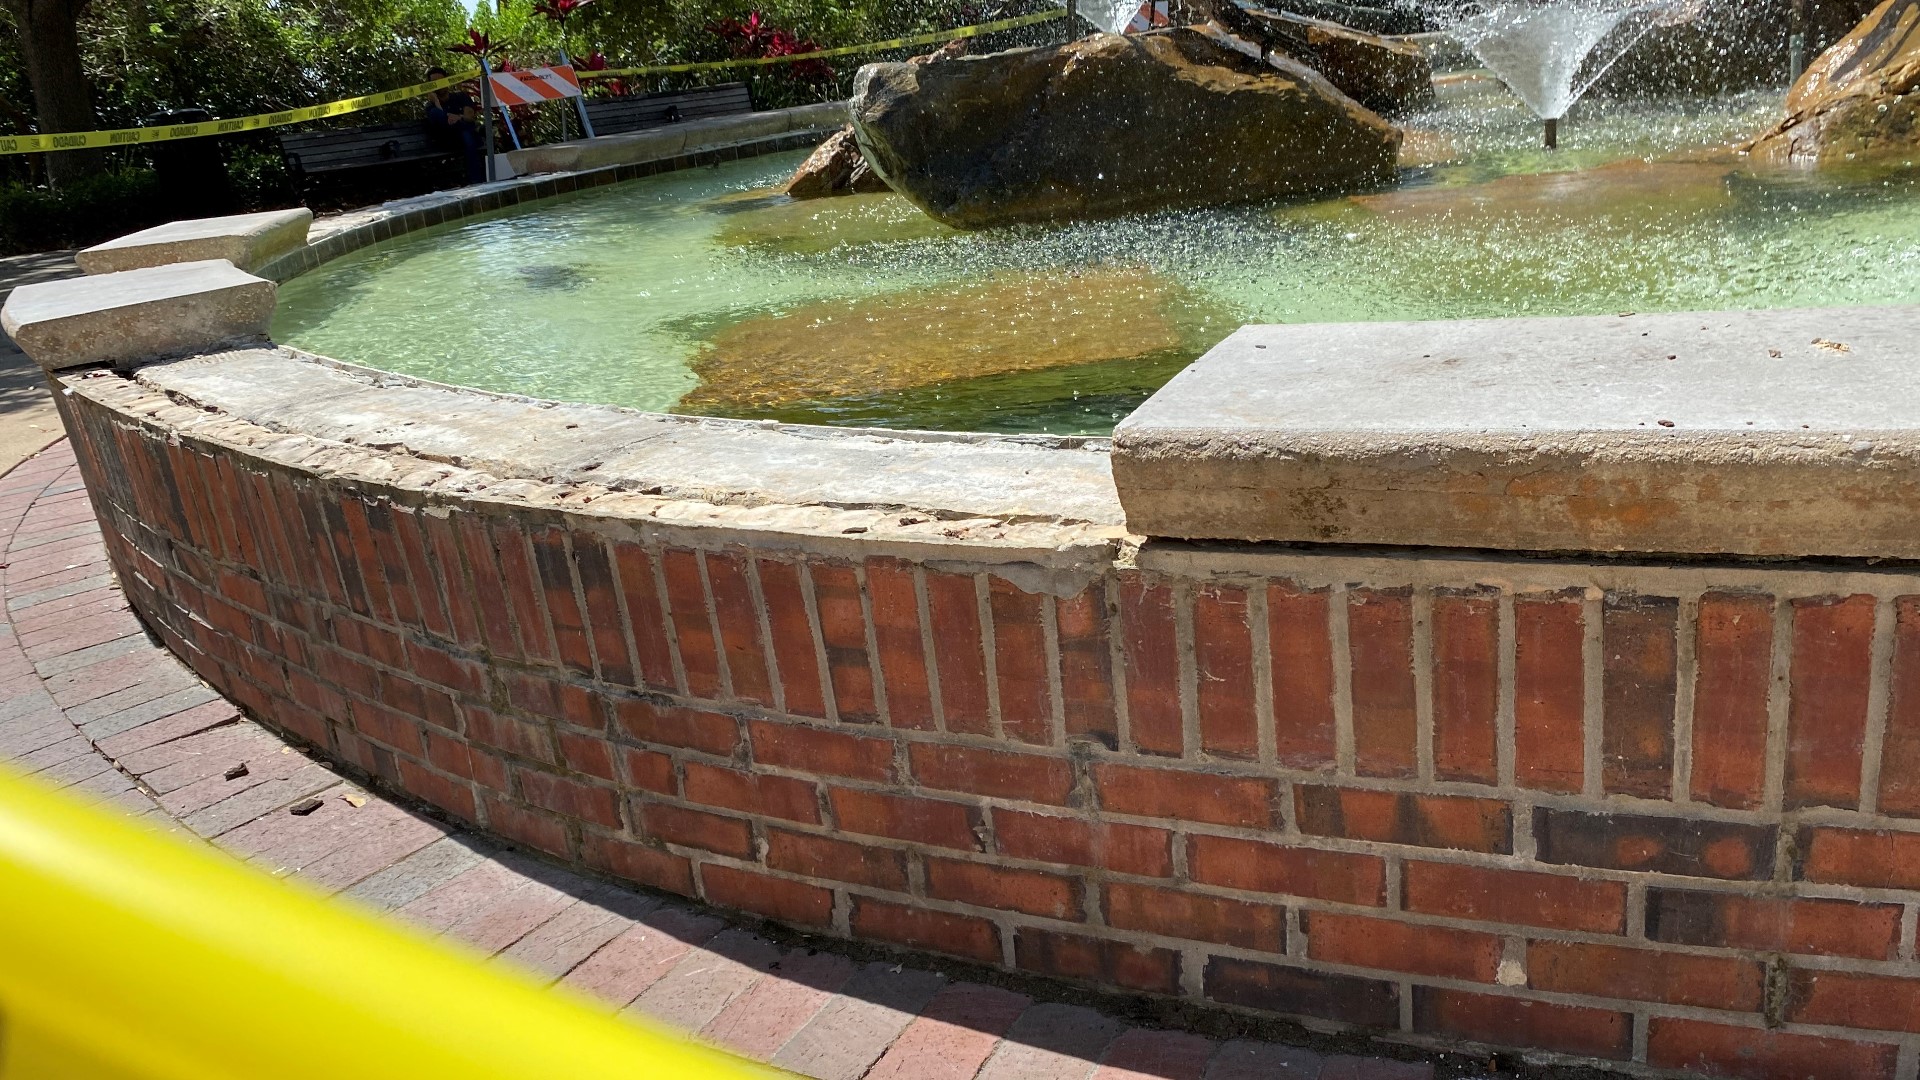 Investigators still don't know who tore apart parts of the concrete fountain.